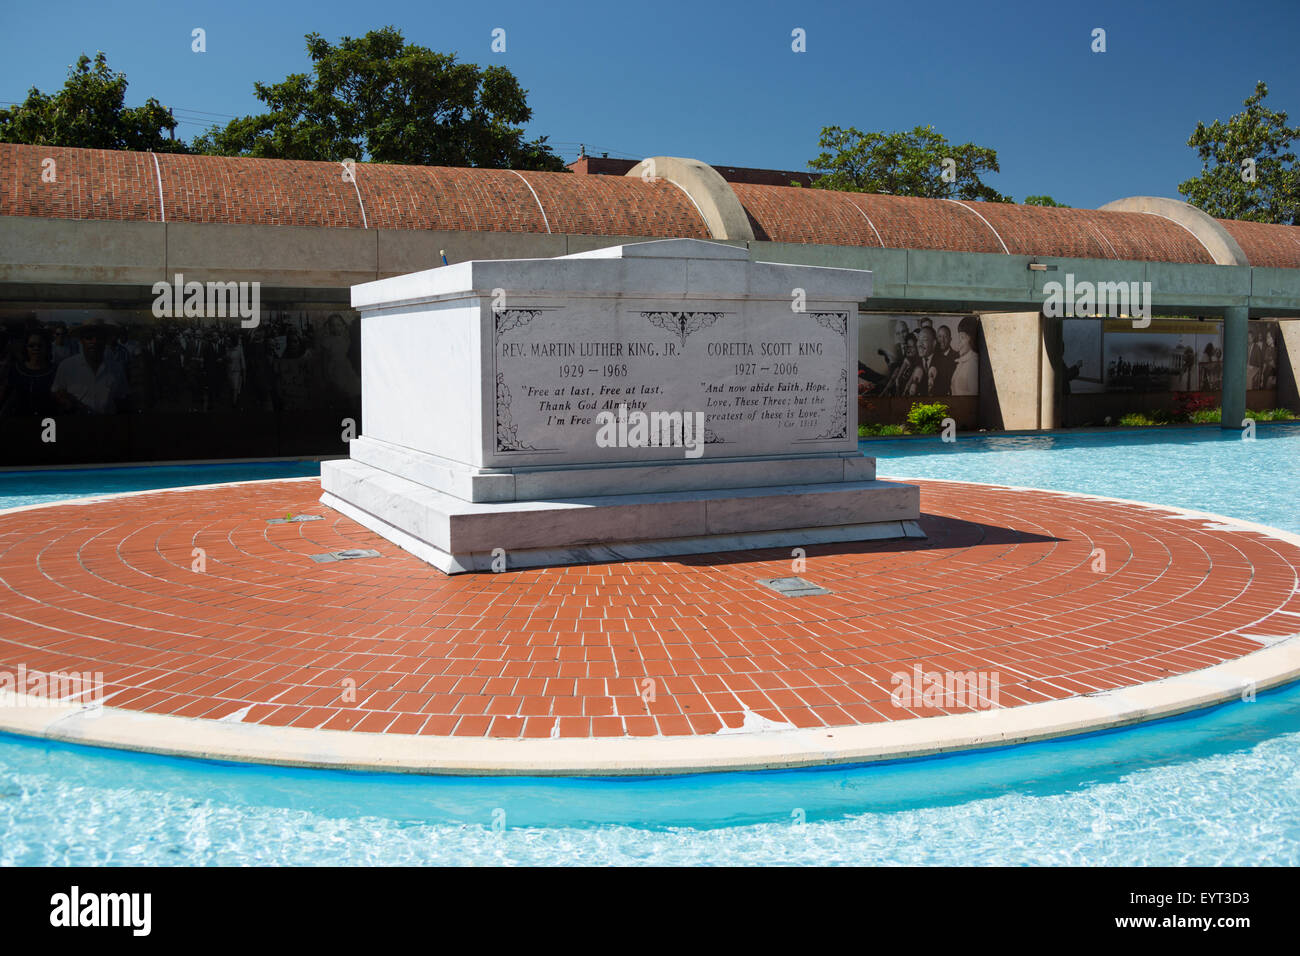 Atlanta - MLK Historic Site:Burlal Site, The tomb of Dr. Ma…